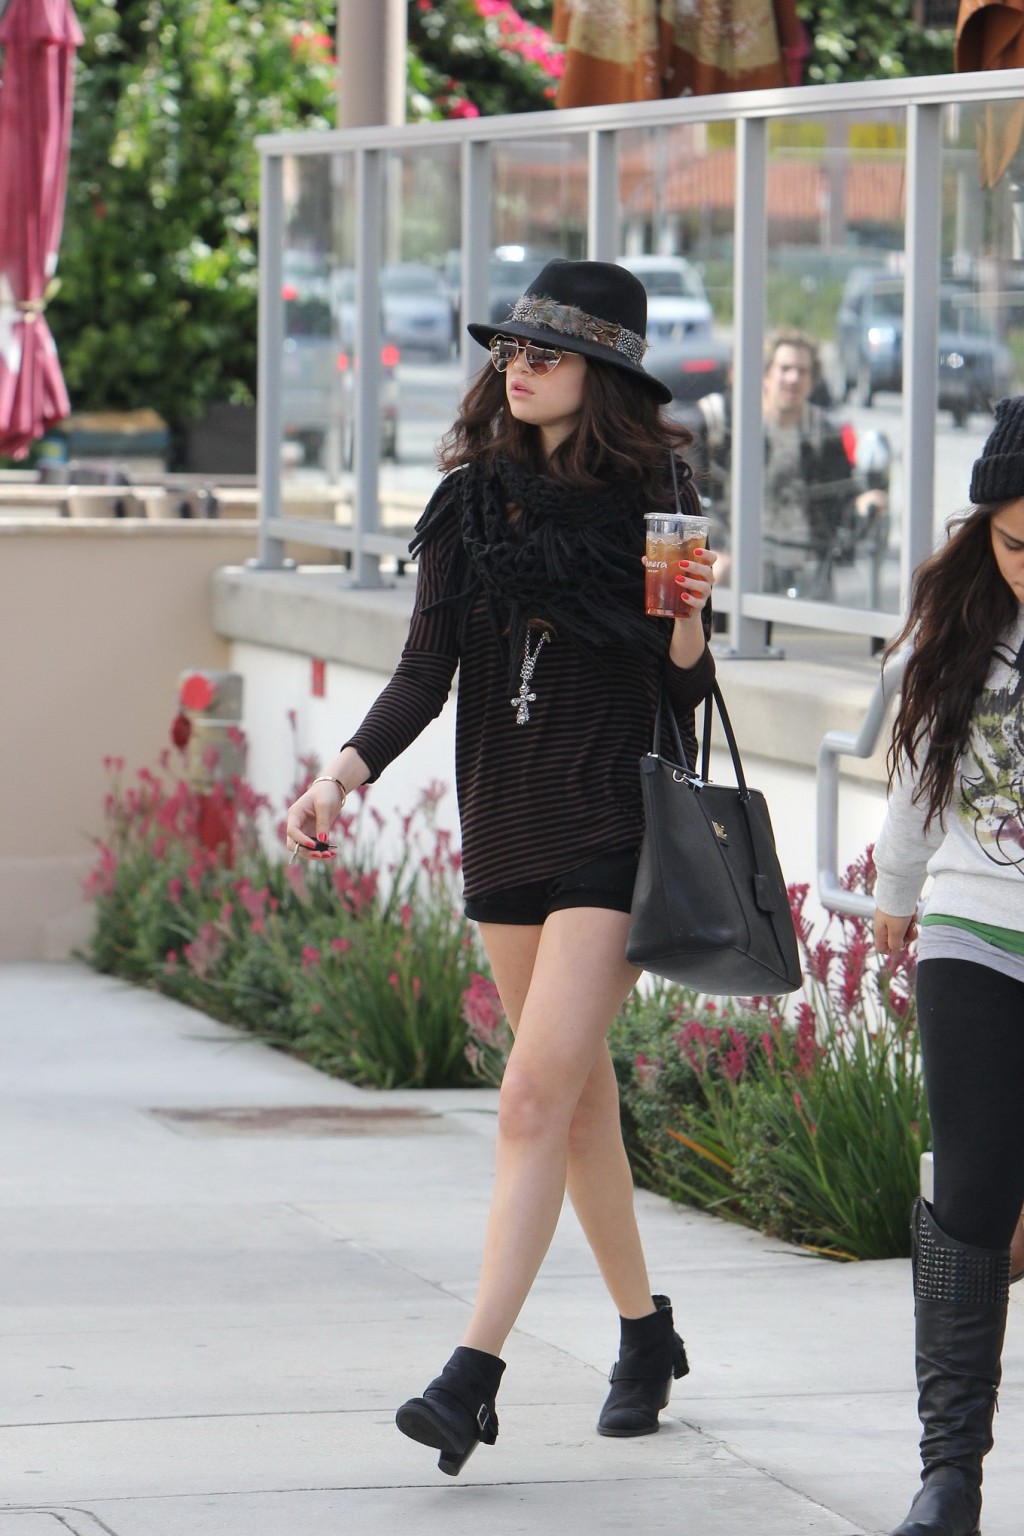 Selena Gomez leggy wearing tiny shorts while leaving Panera Bread in Encino,LA #75242097